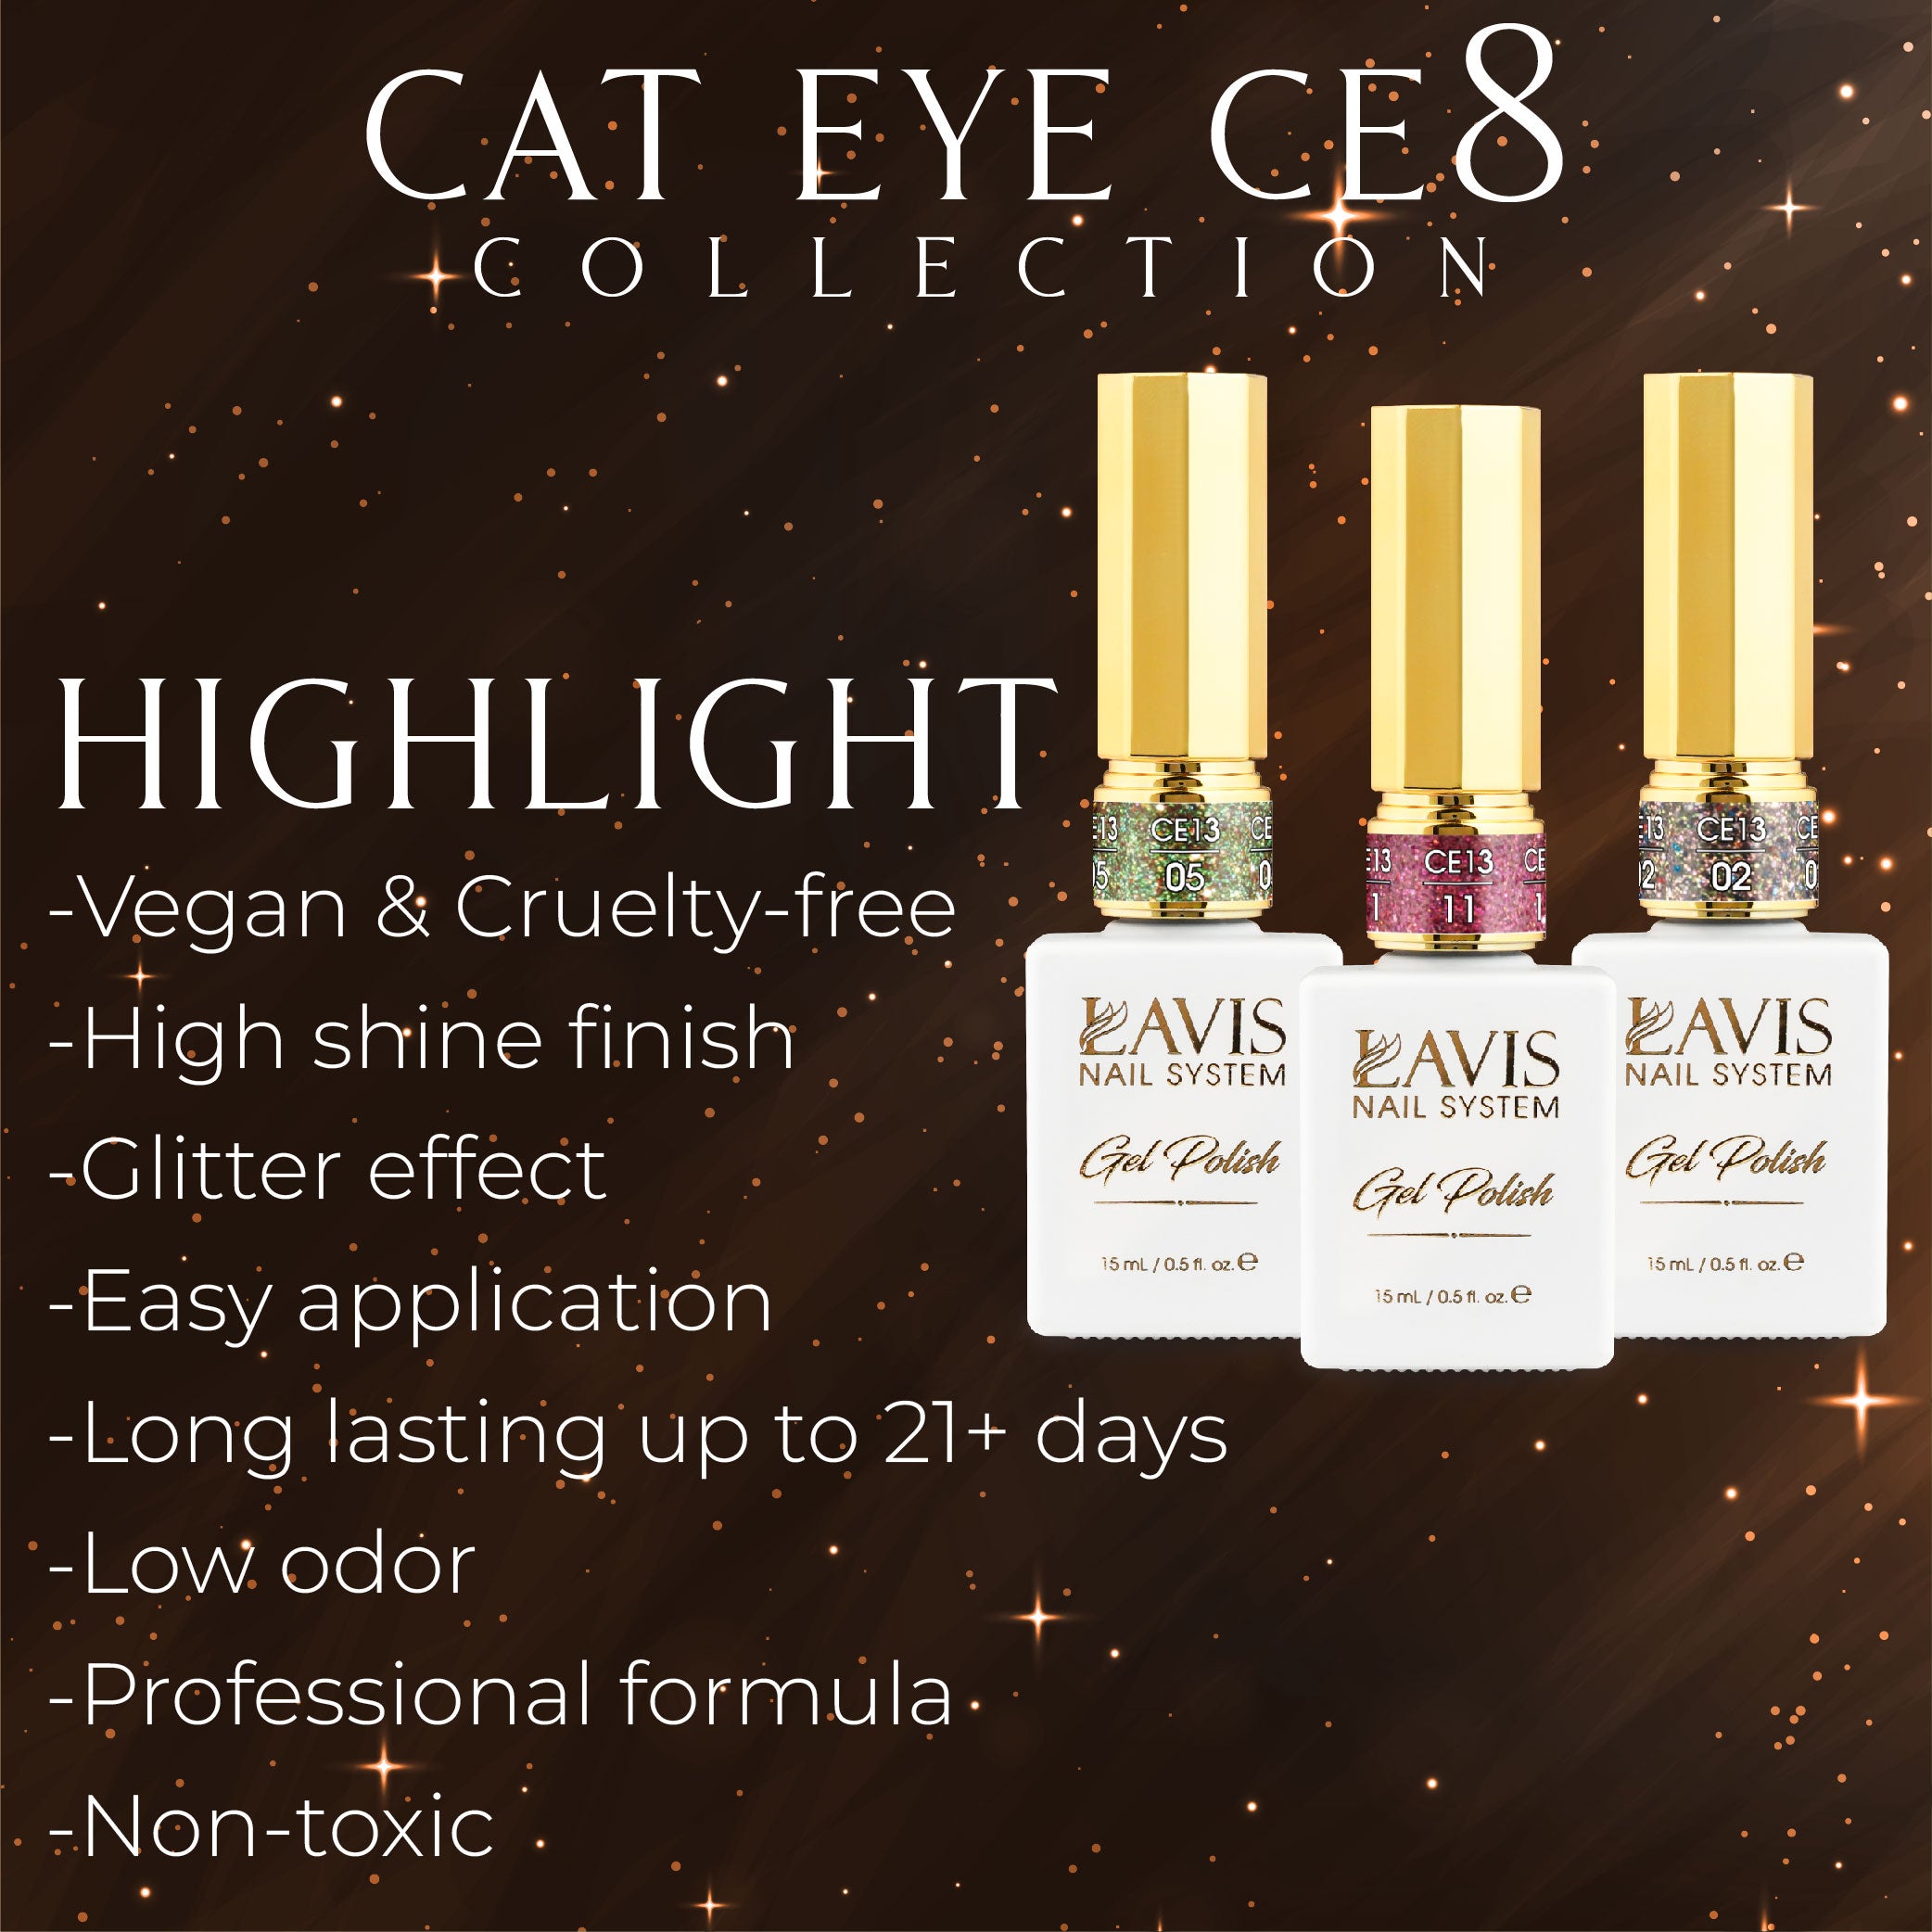 LAVIS Cat Eyes CE8 - 03 - Gel Polish 0.5 oz - Lavis Hidden Treasures Collection